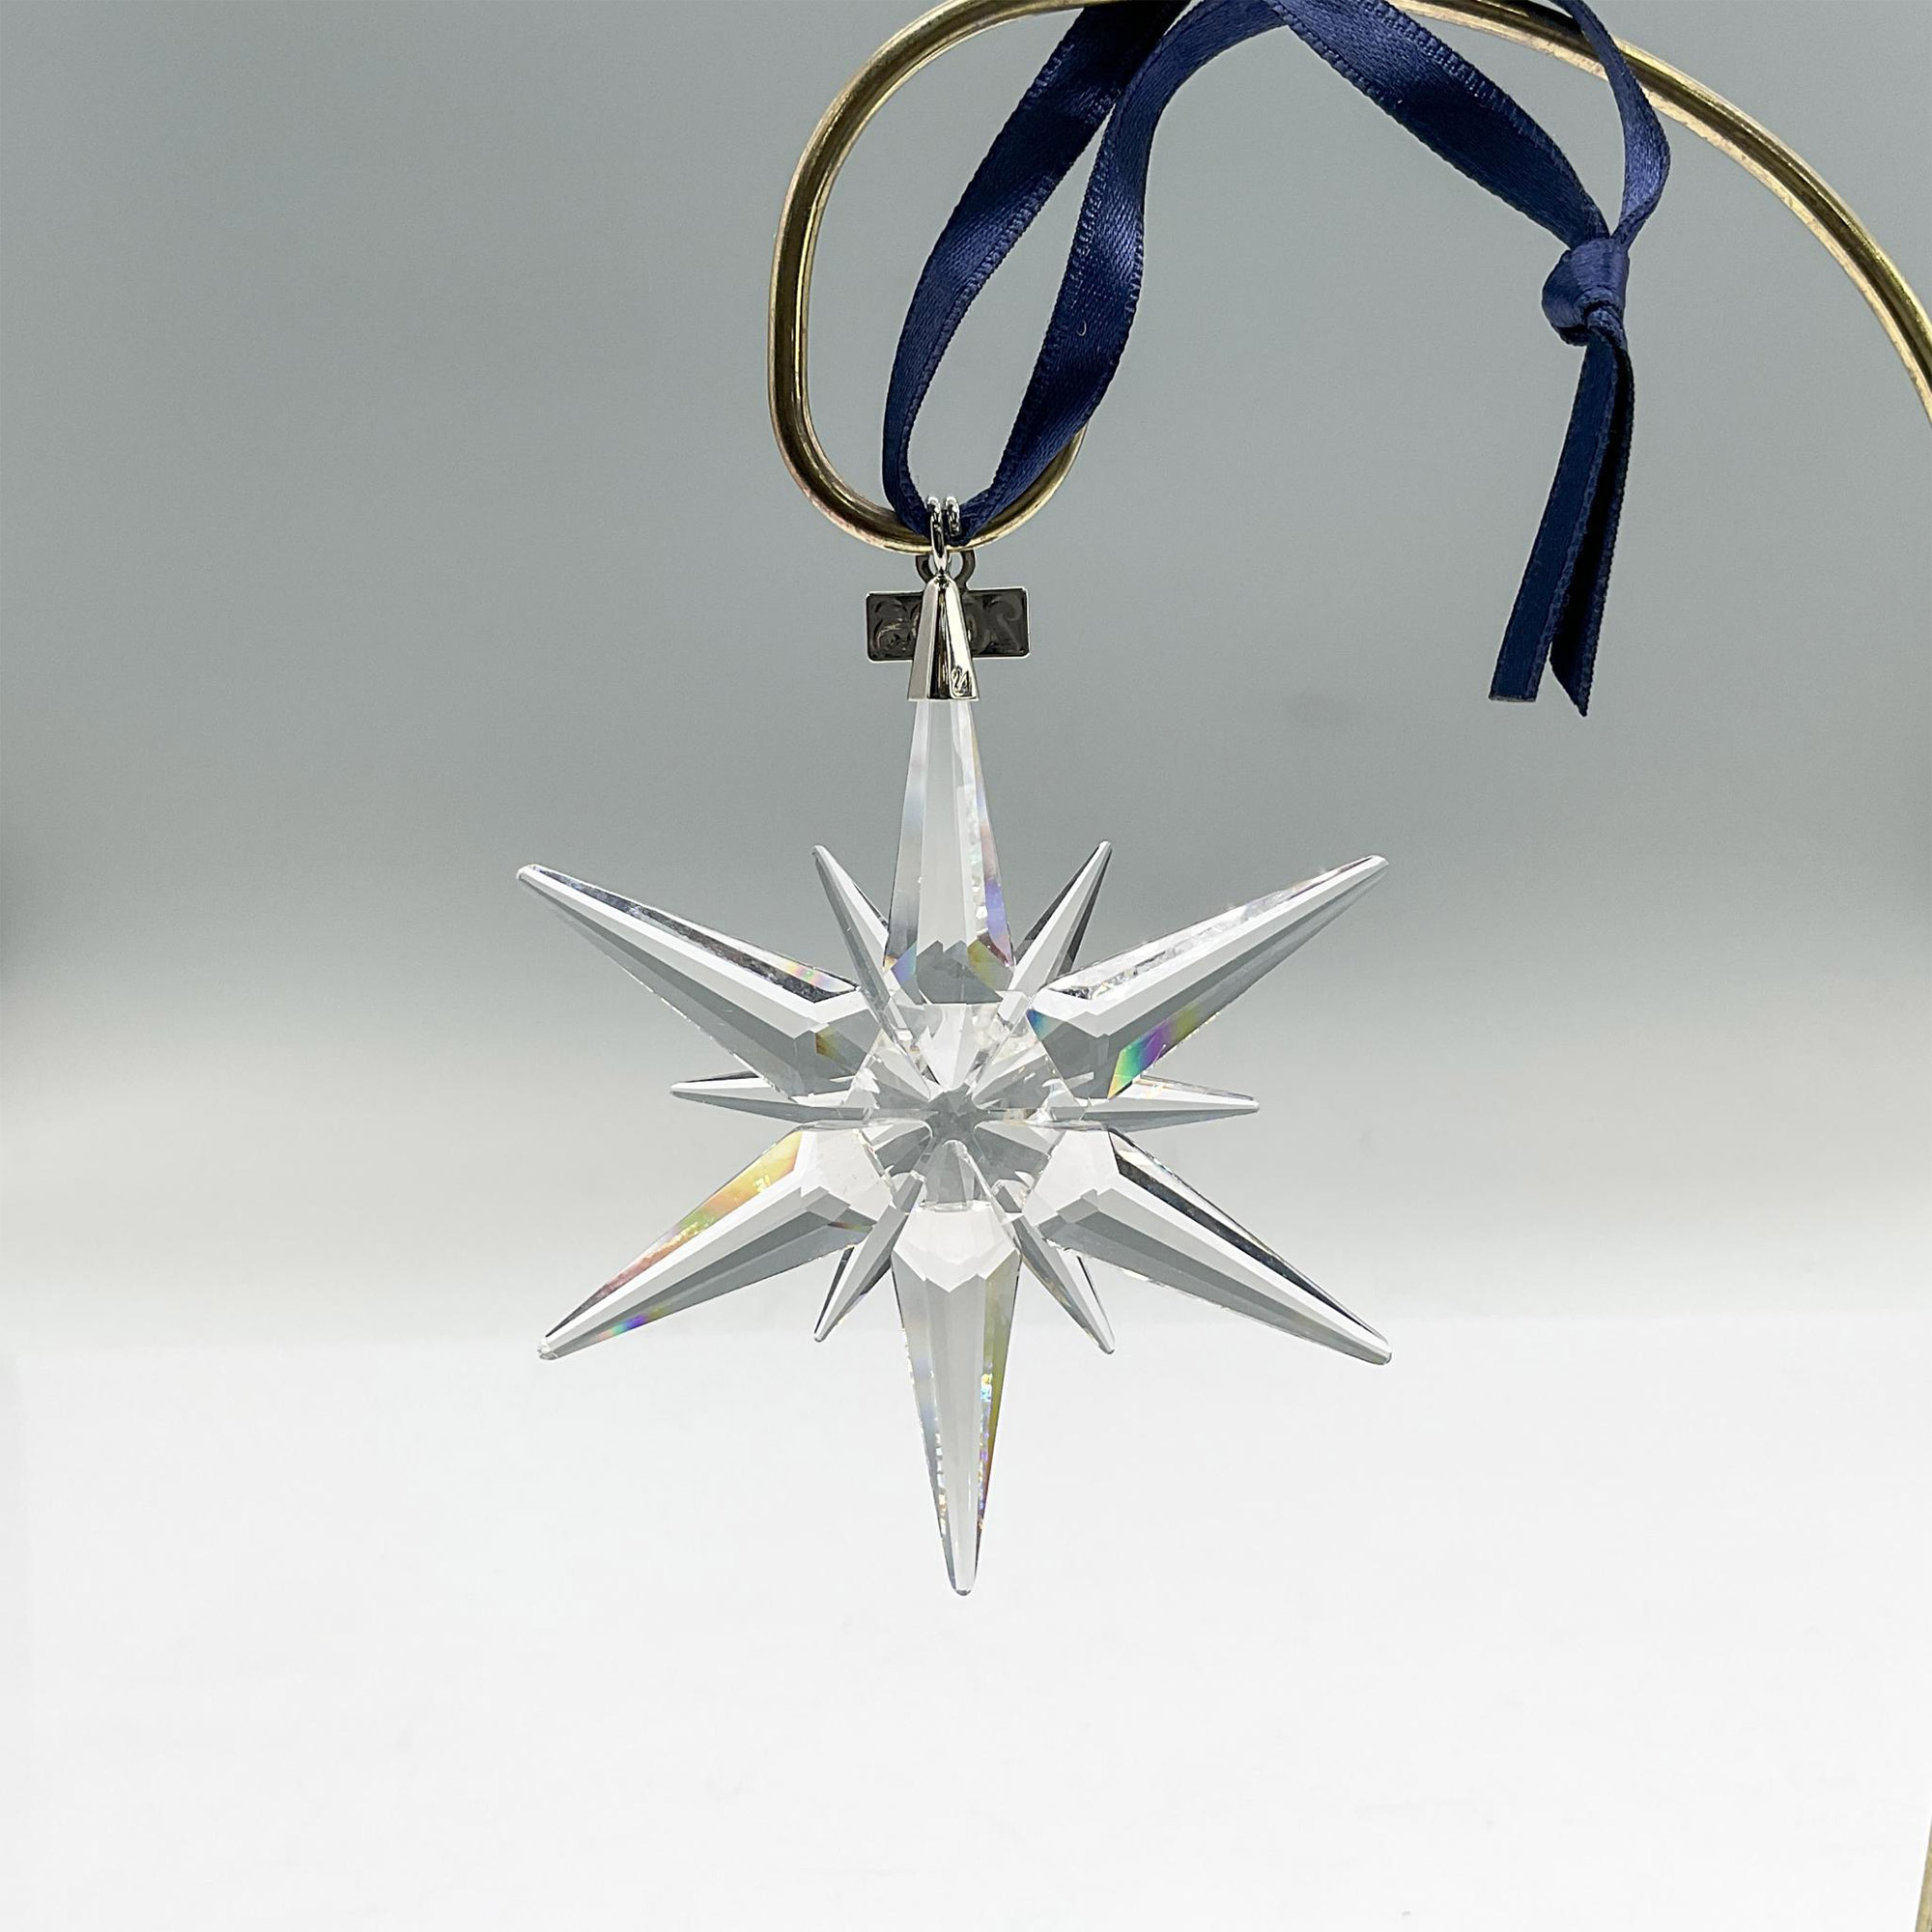 Swarovski Crystal Christmas Ornament 2005 Rockefeller Center - Image 2 of 3